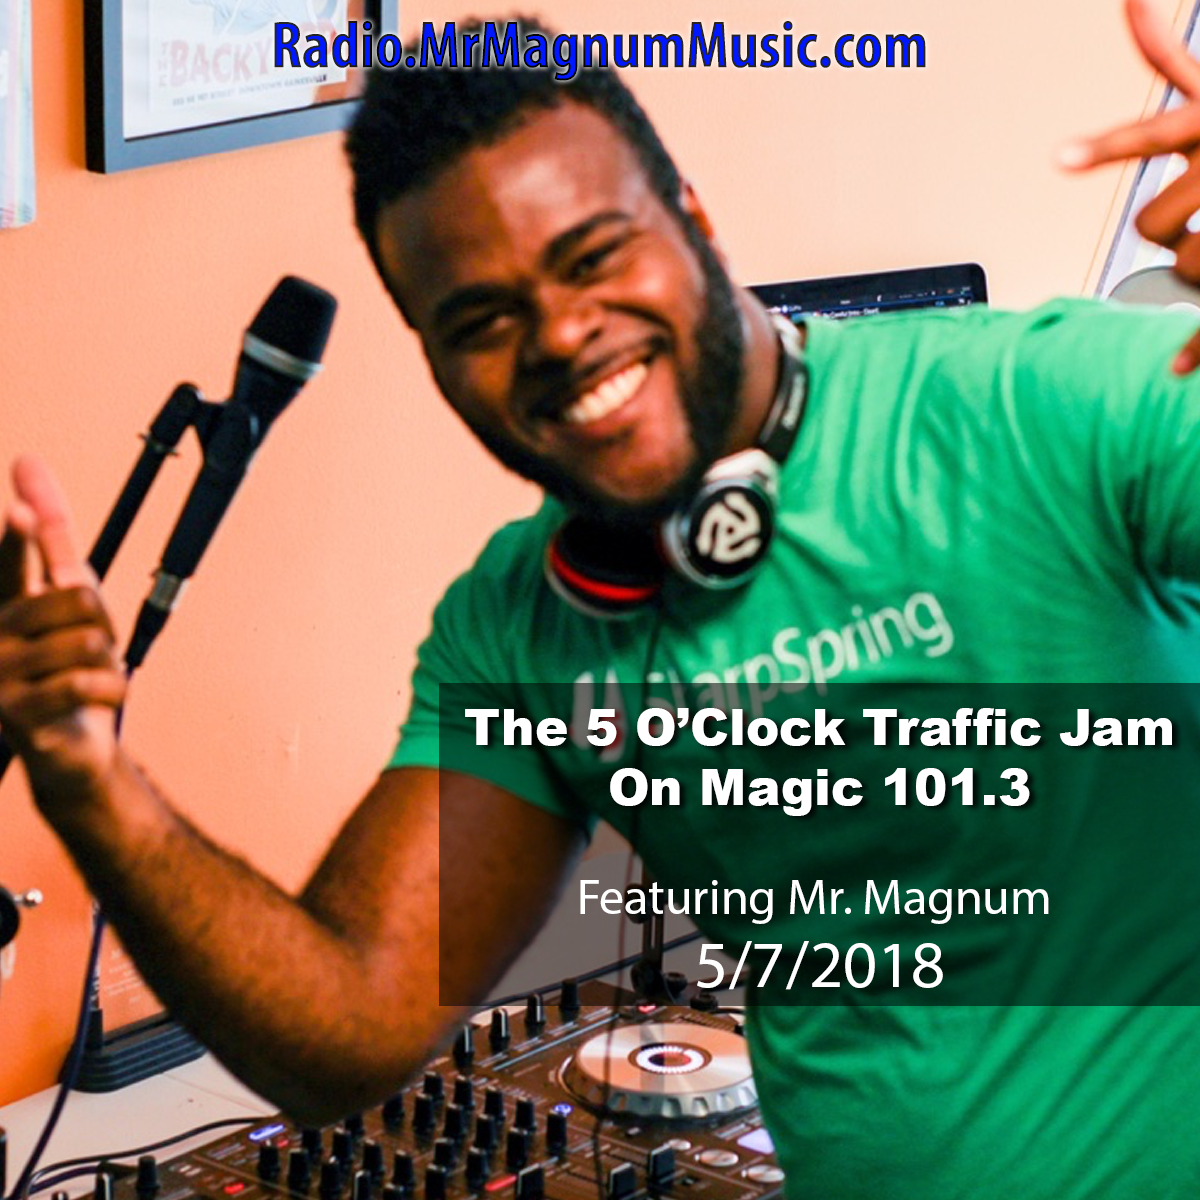 The 5 O'Clock Traffic Jam 20180507 featuring Gainesville's #1 DJ, Mr. Magnum on Magic 101.3